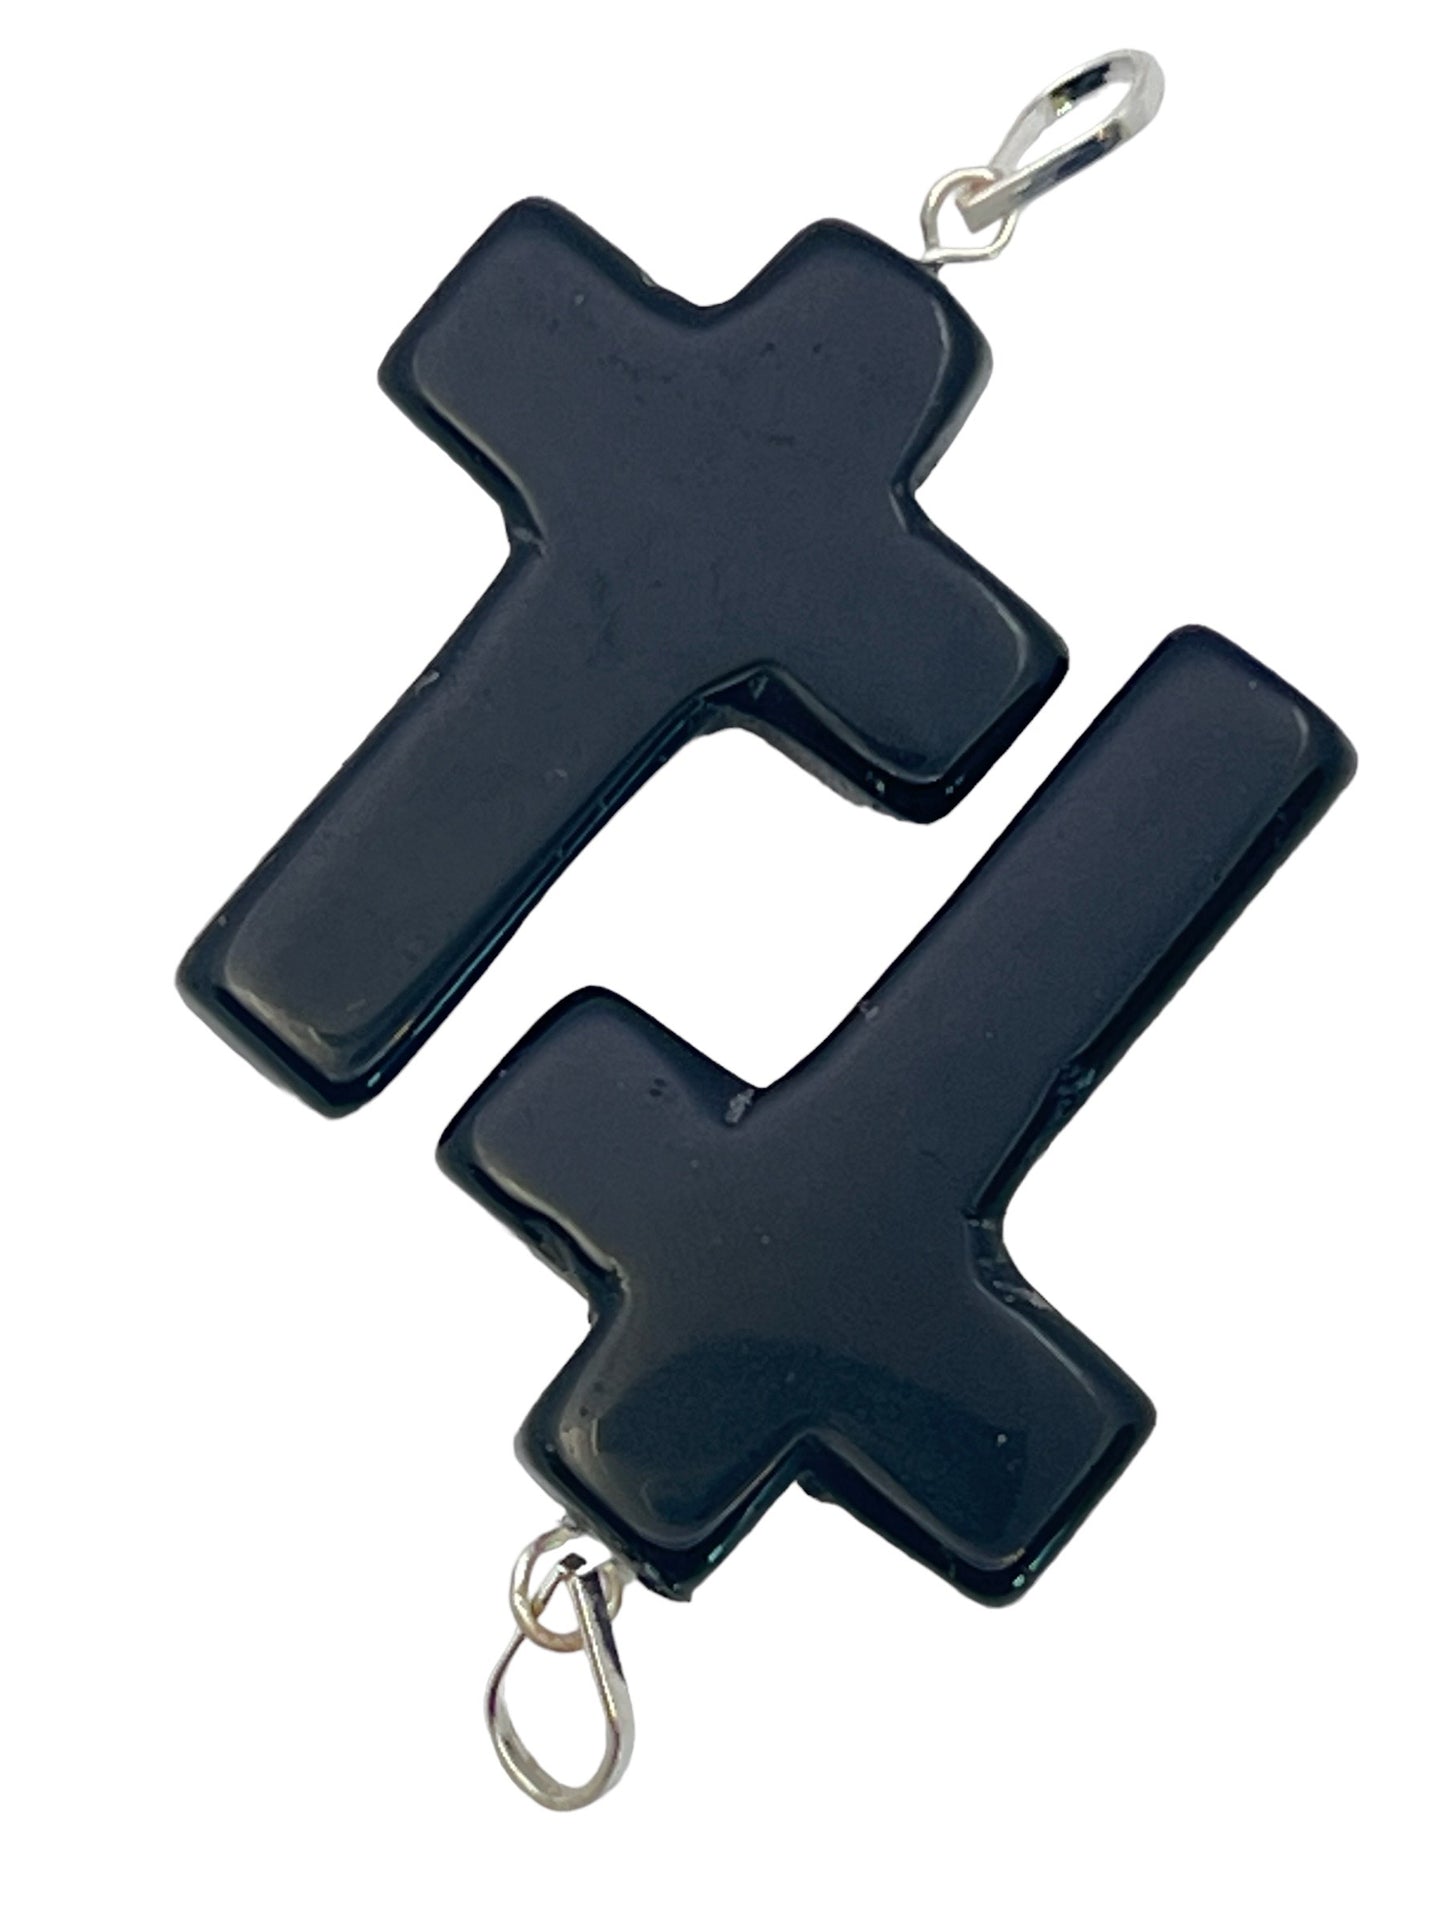 Gemstone Cross-Shaped Pendant - Black Obsidian (2-Pack)